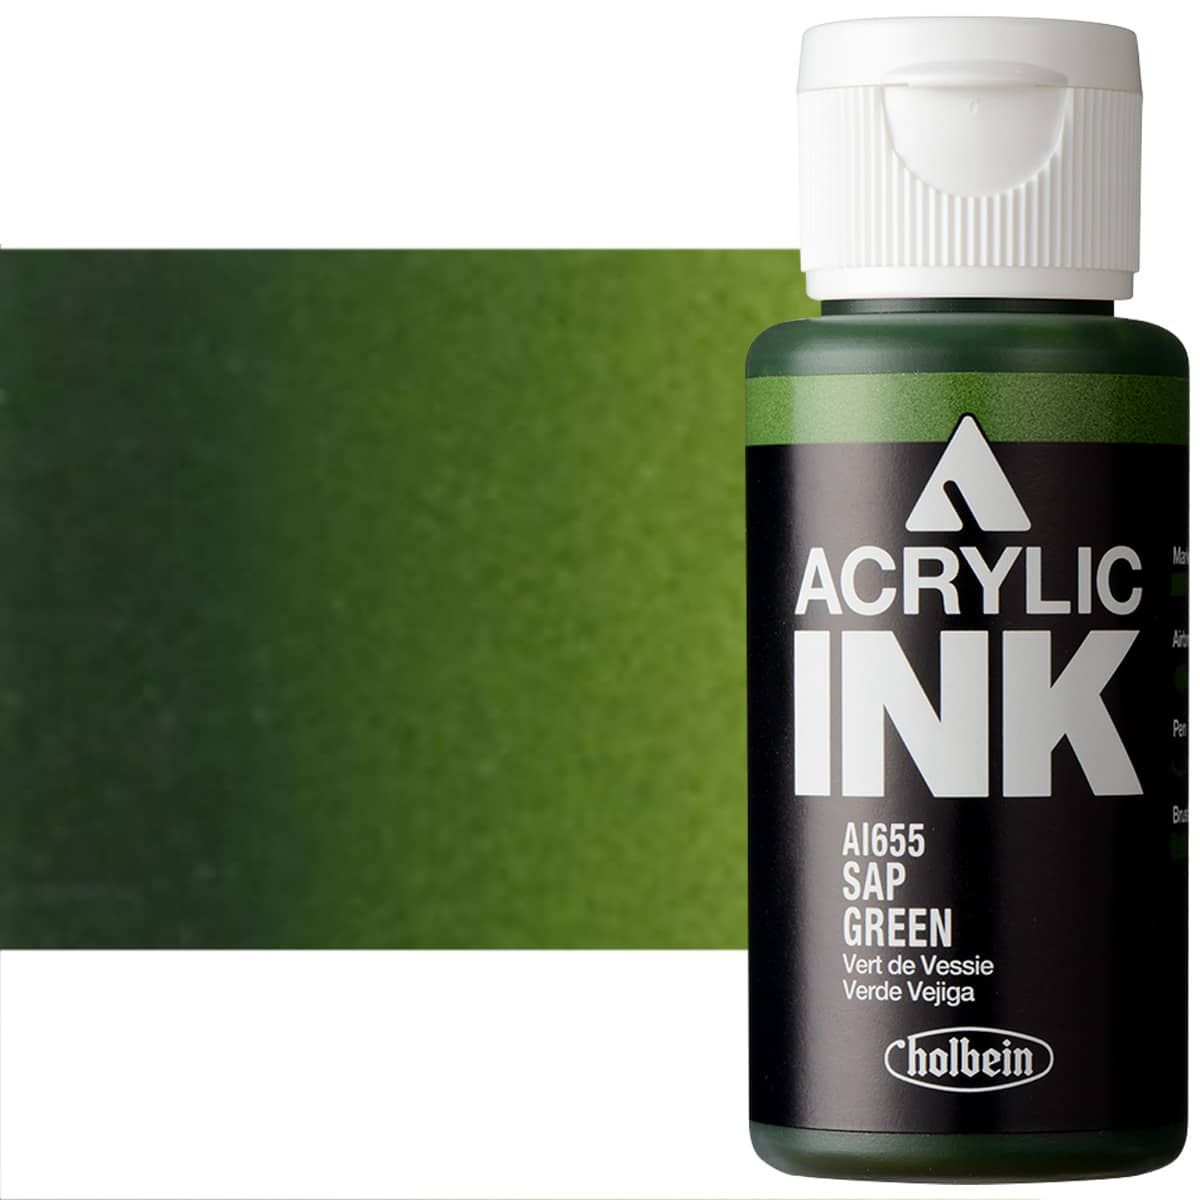 Holbein Acrylic Ink - Sap Green, 30ml